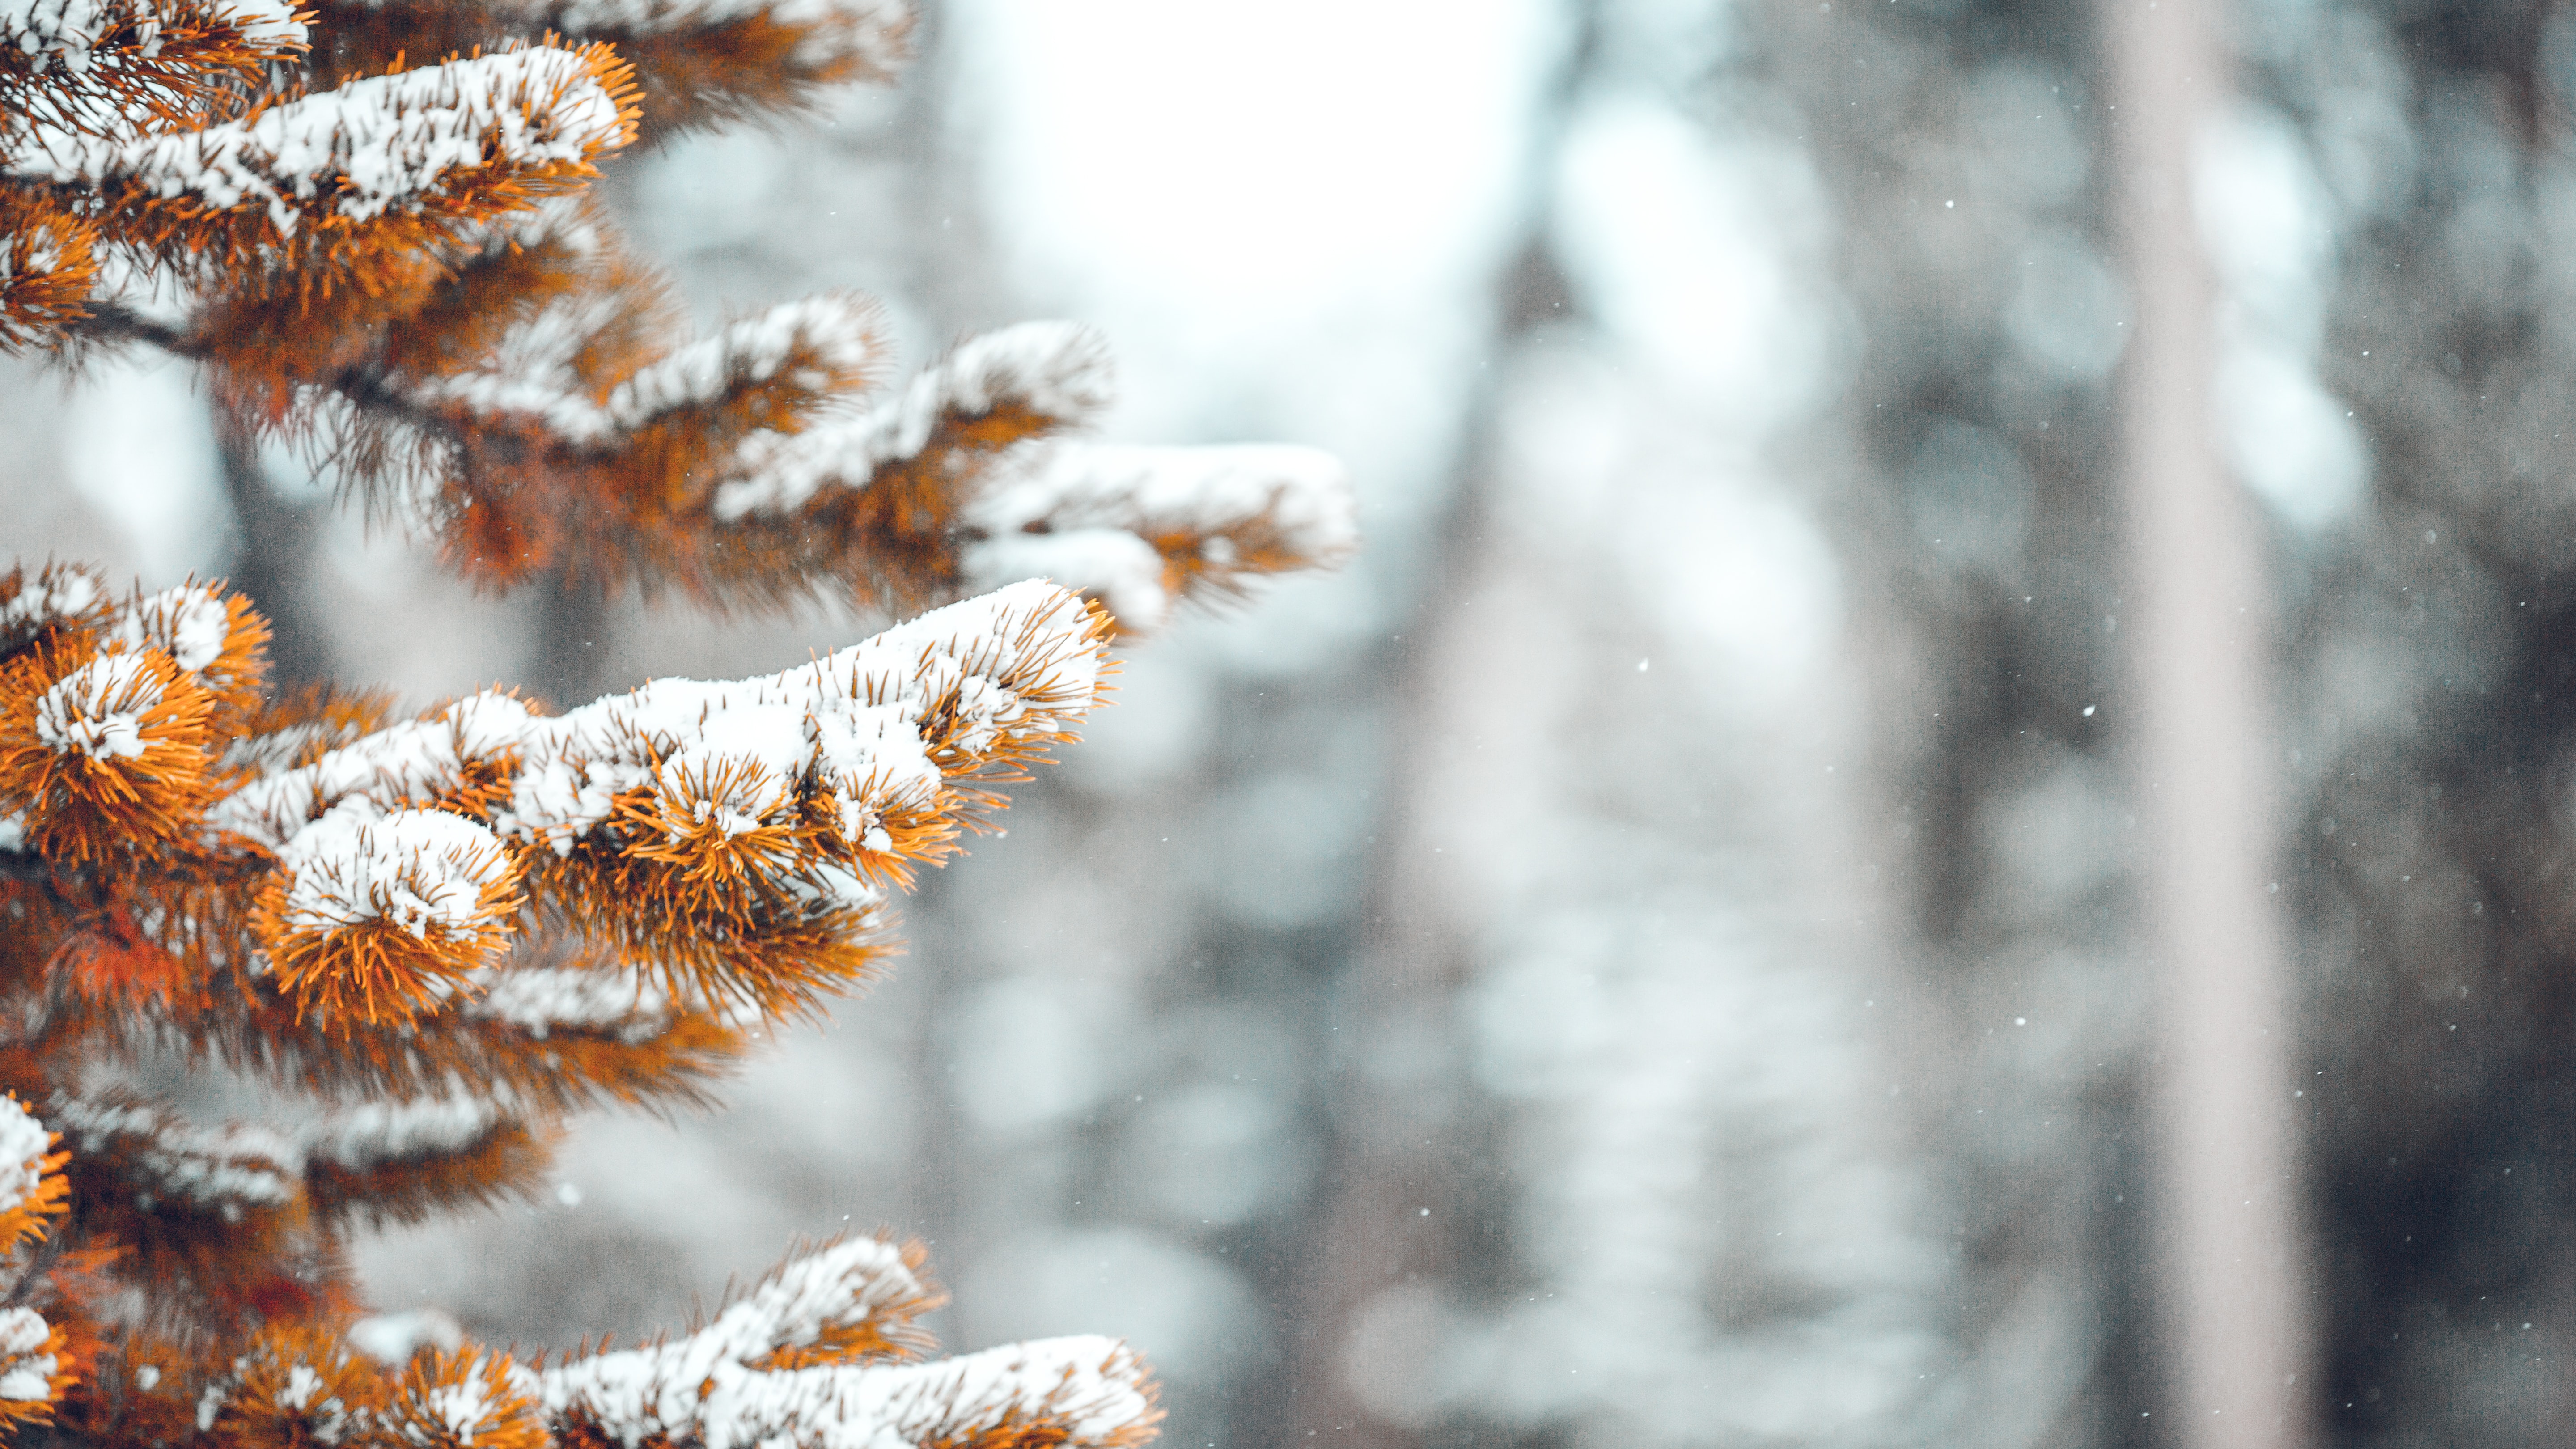 General 5760x3240 winter snow nature pine trees fall depth of field blurred closeup